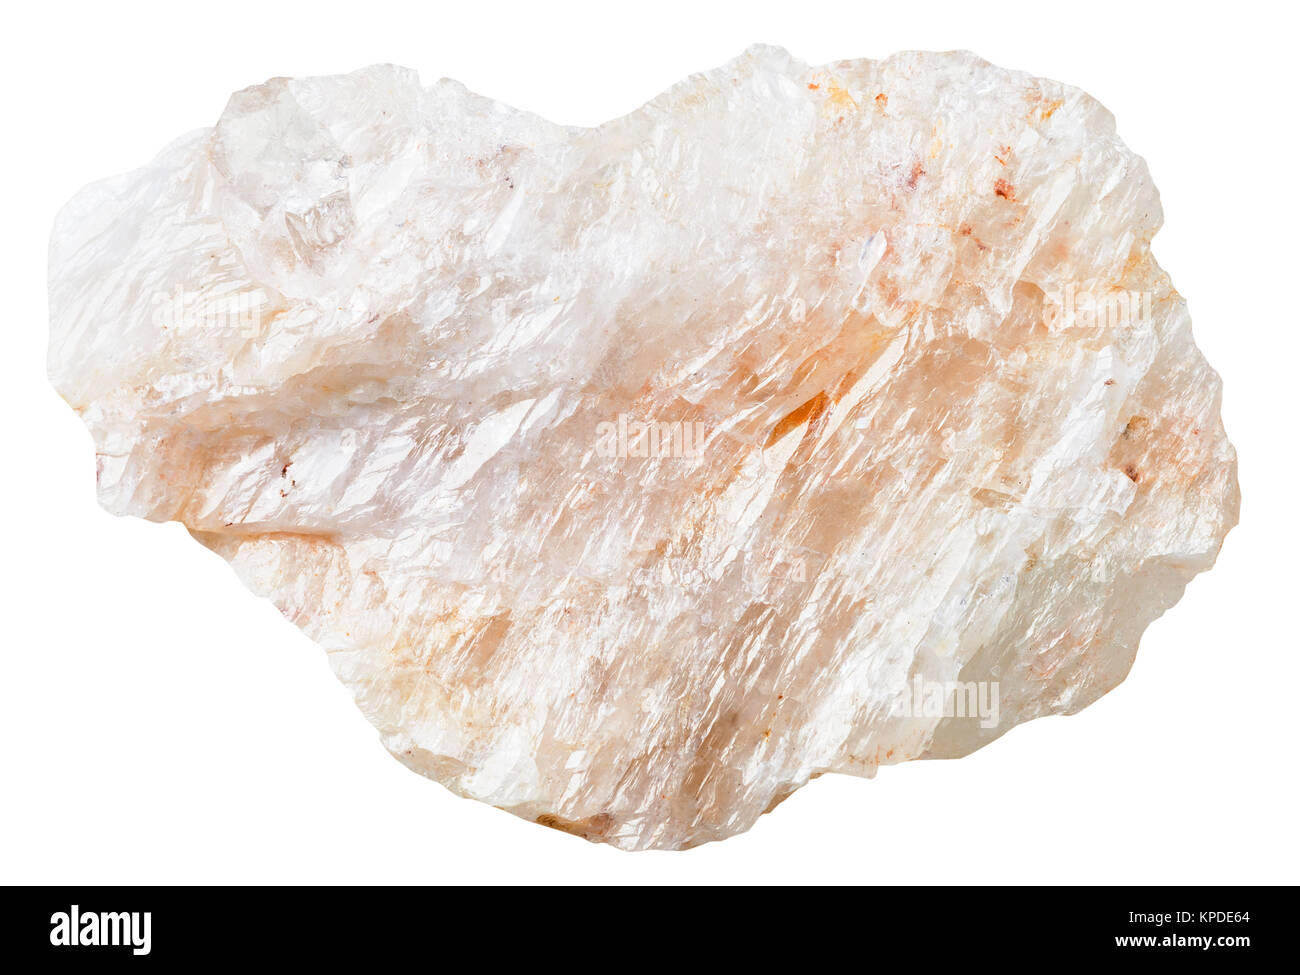 Belomorite (moonstone) gem stone isolated Stock Photo